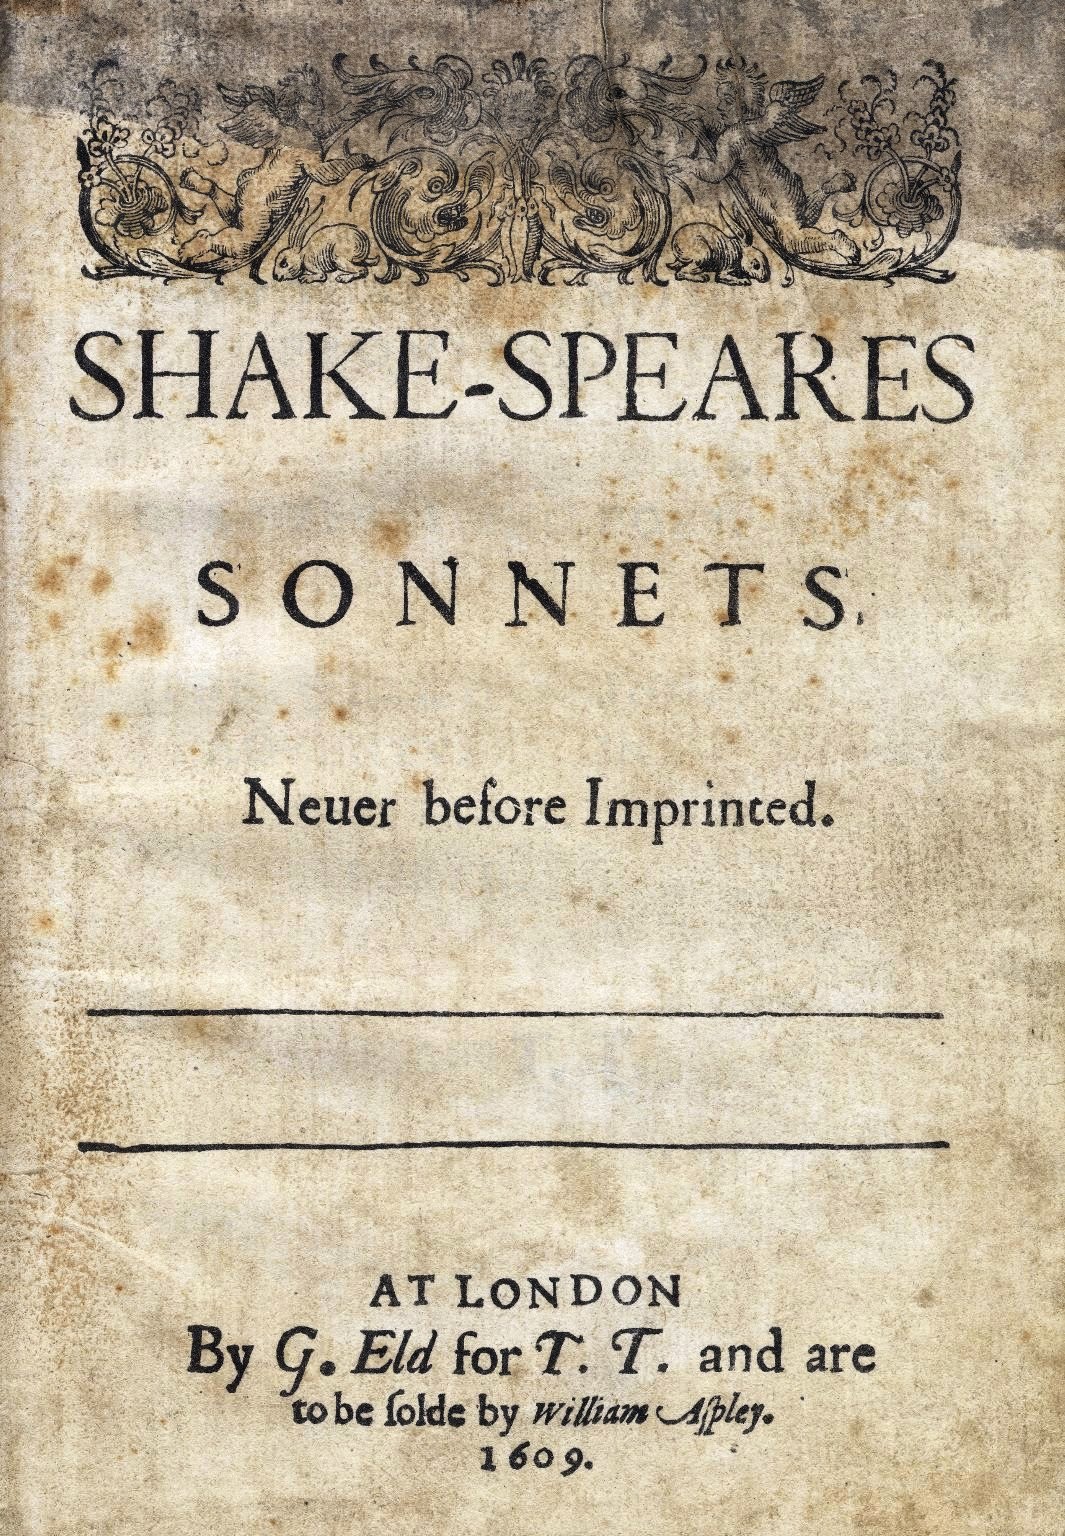 Free essay on shakespeare